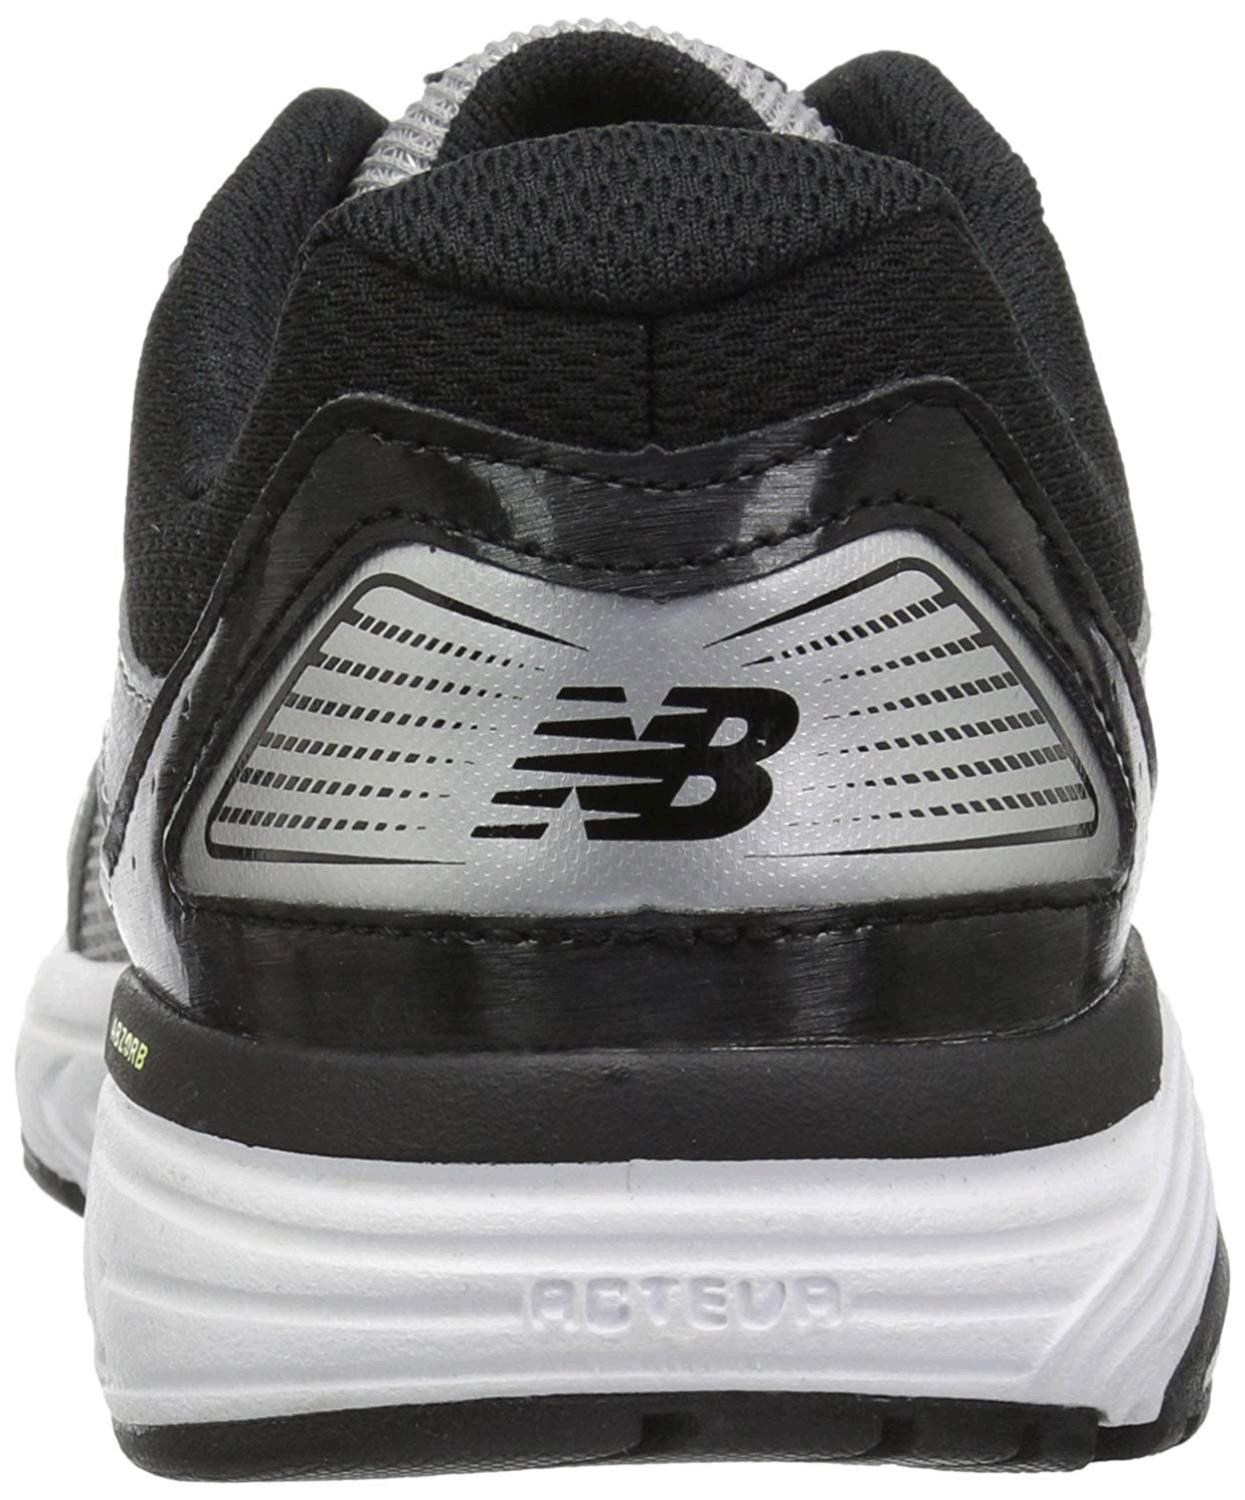 new balance m560v6 mens running shoes